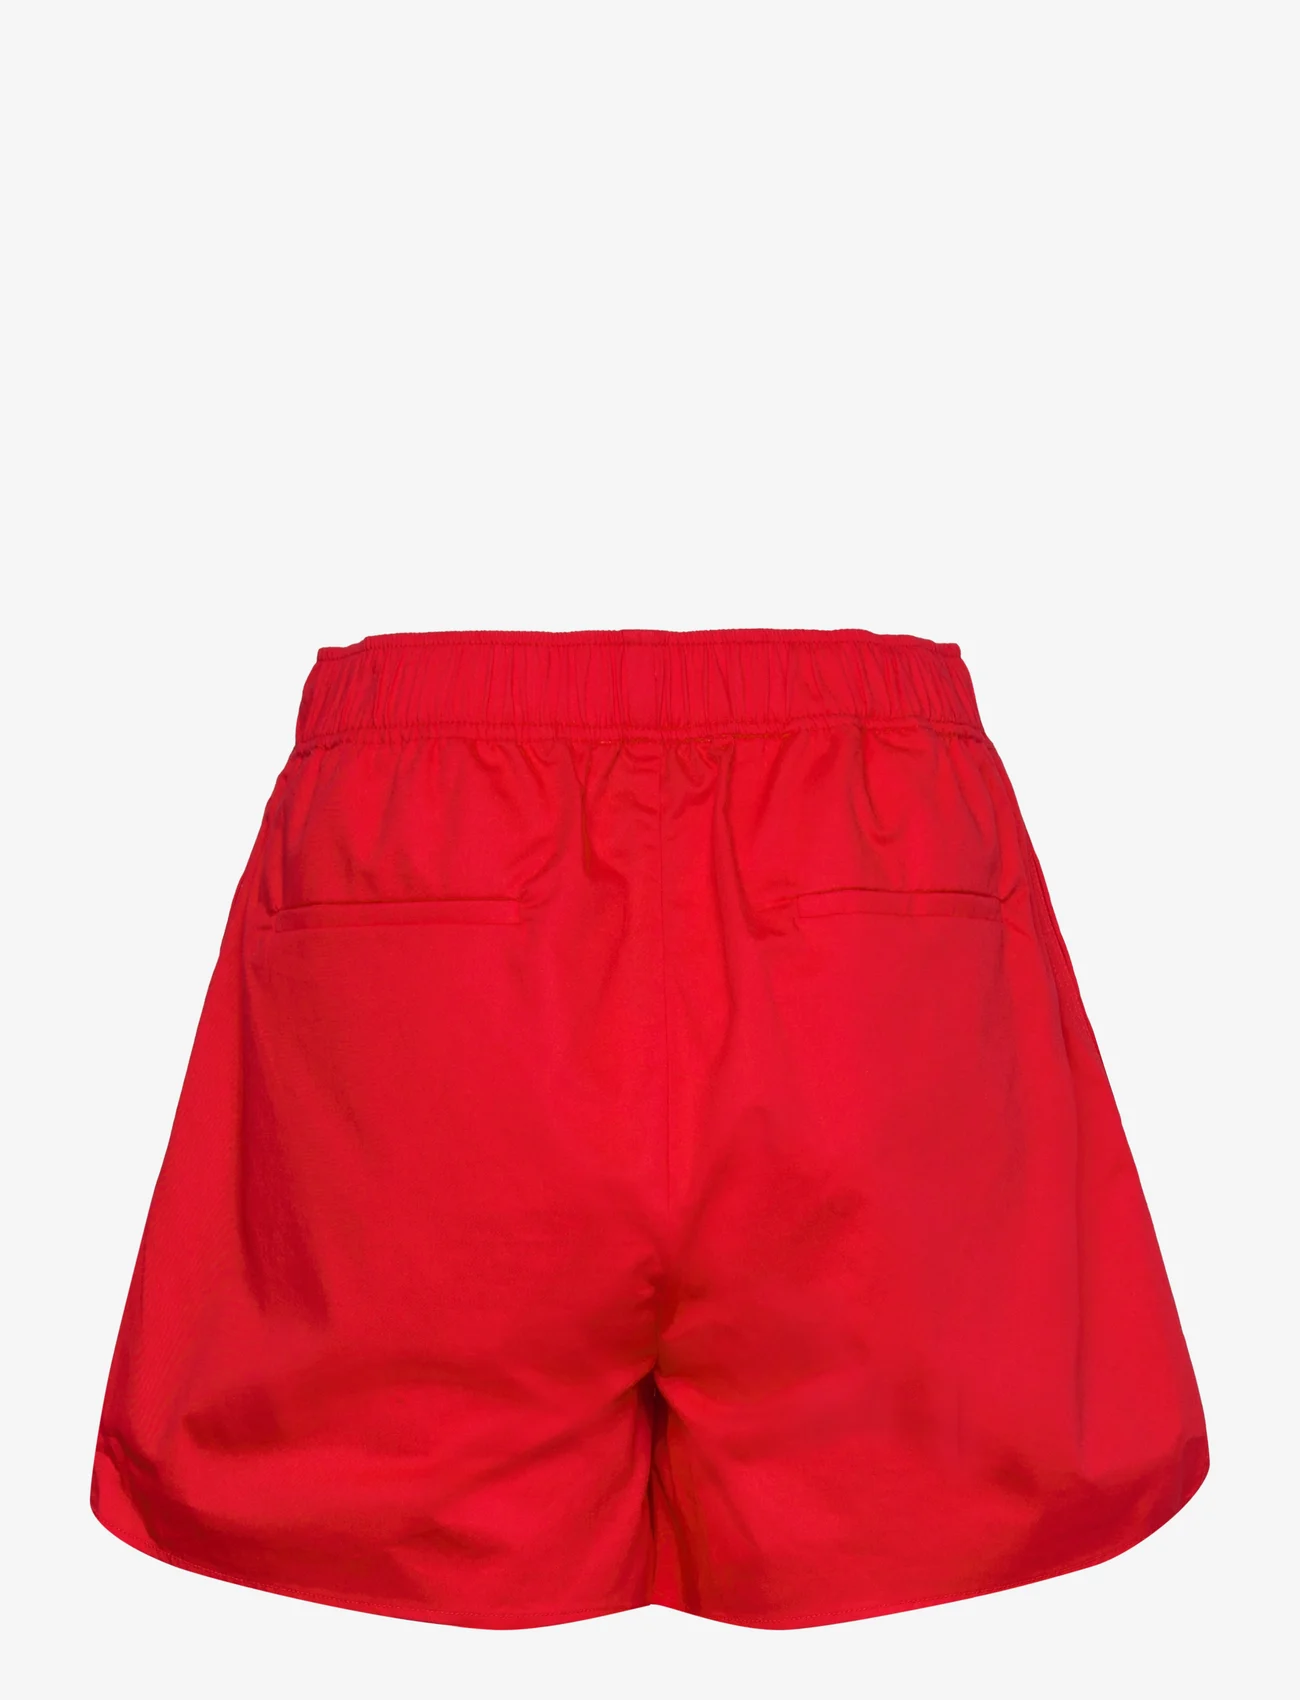 STINE GOYA - Carmen, 1796 Cotton Poplin - casual shorts - fiery red - 1